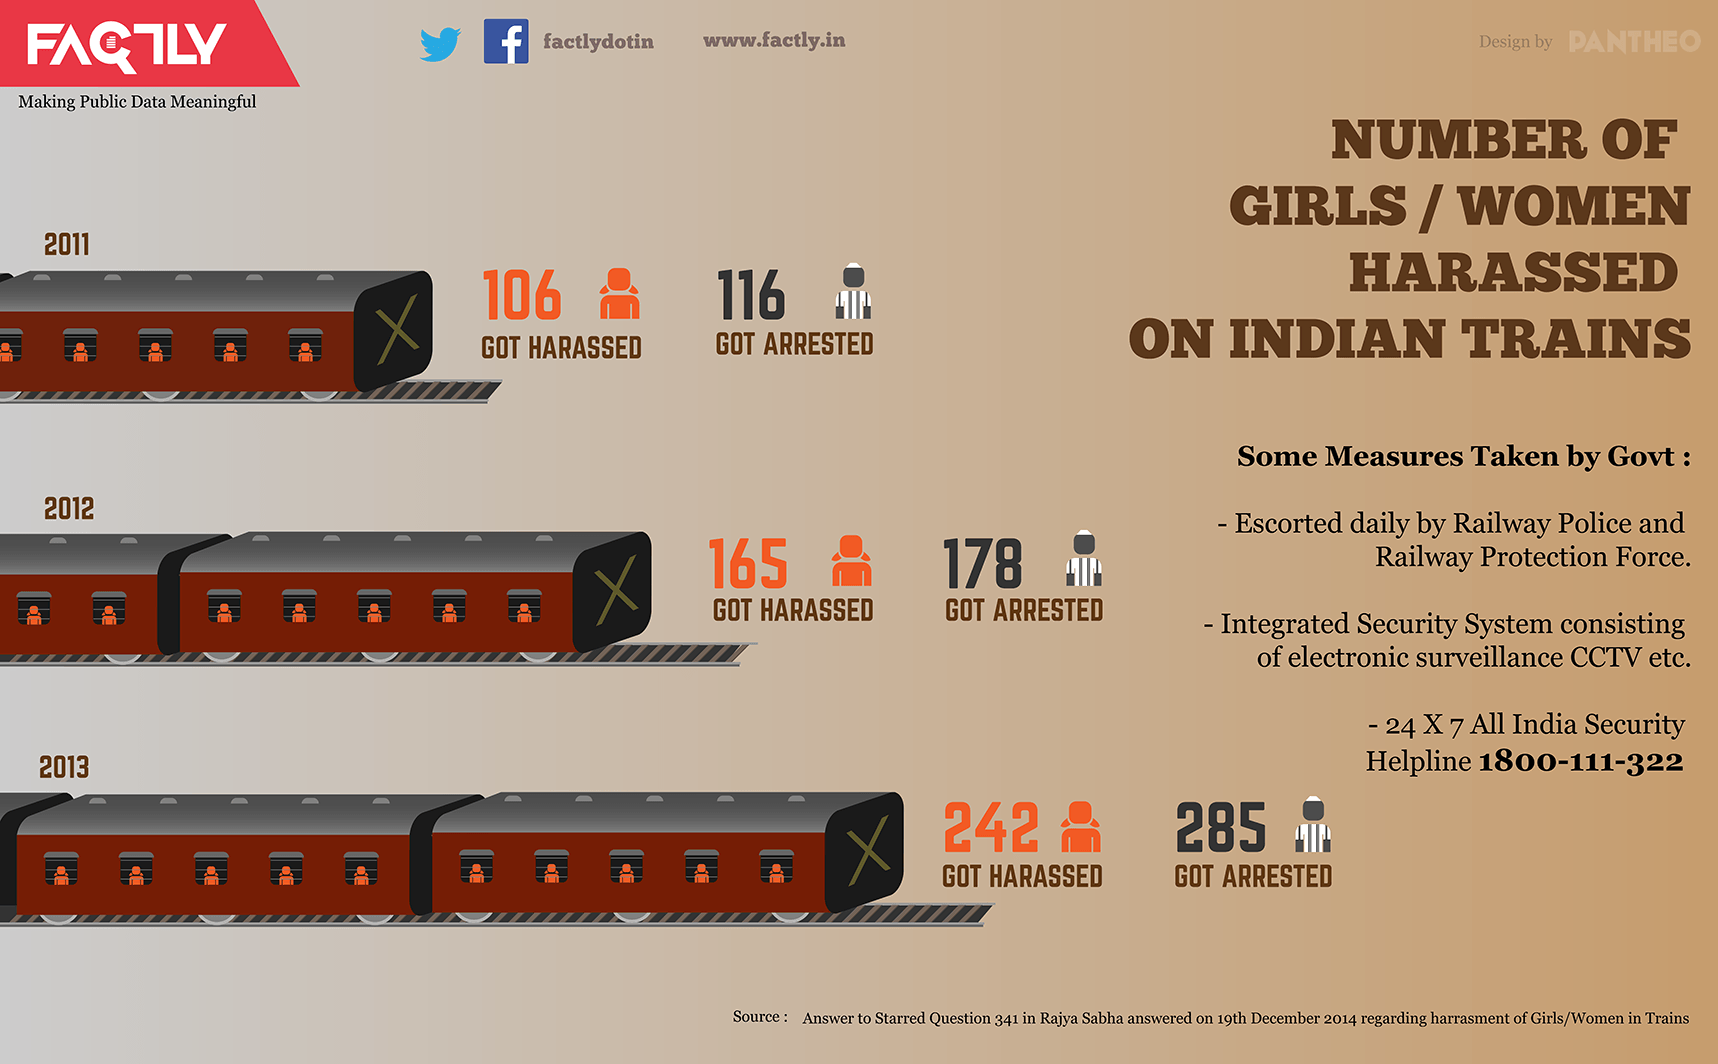 railway security helpline train harassment statistics india infographic